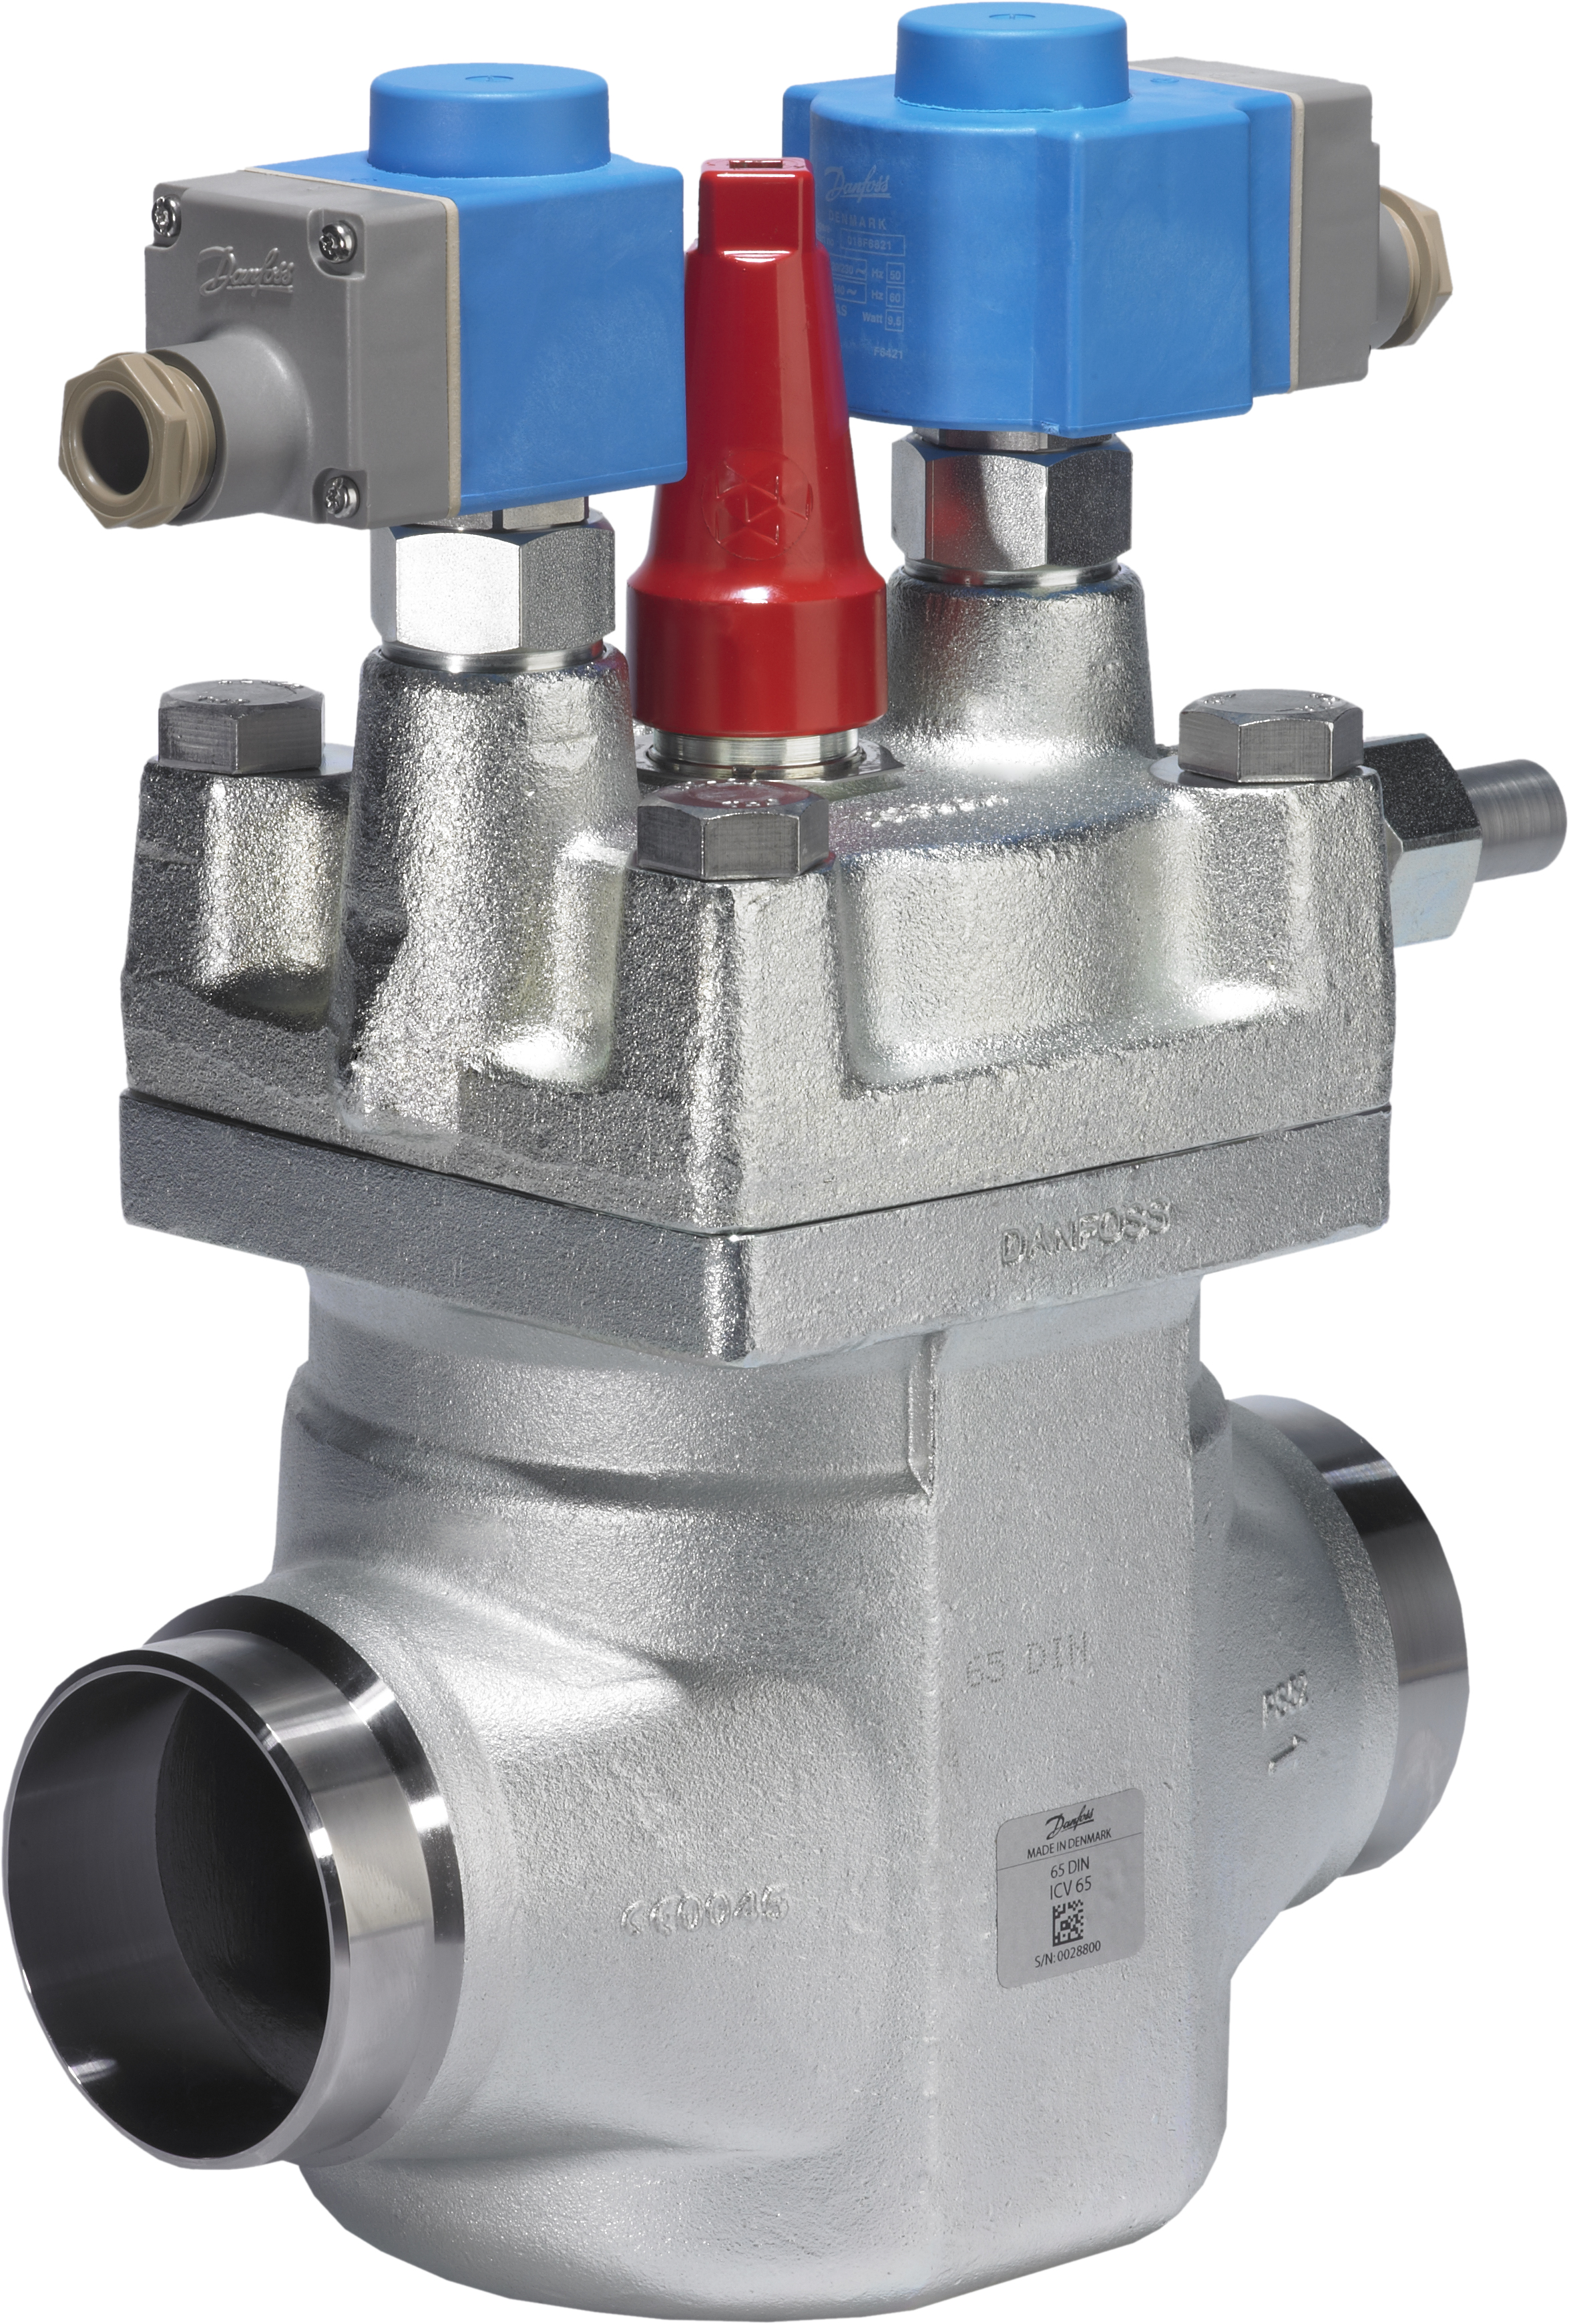 2-step solenoid valve, ICLX 65, 65.0 mm, Socket weld